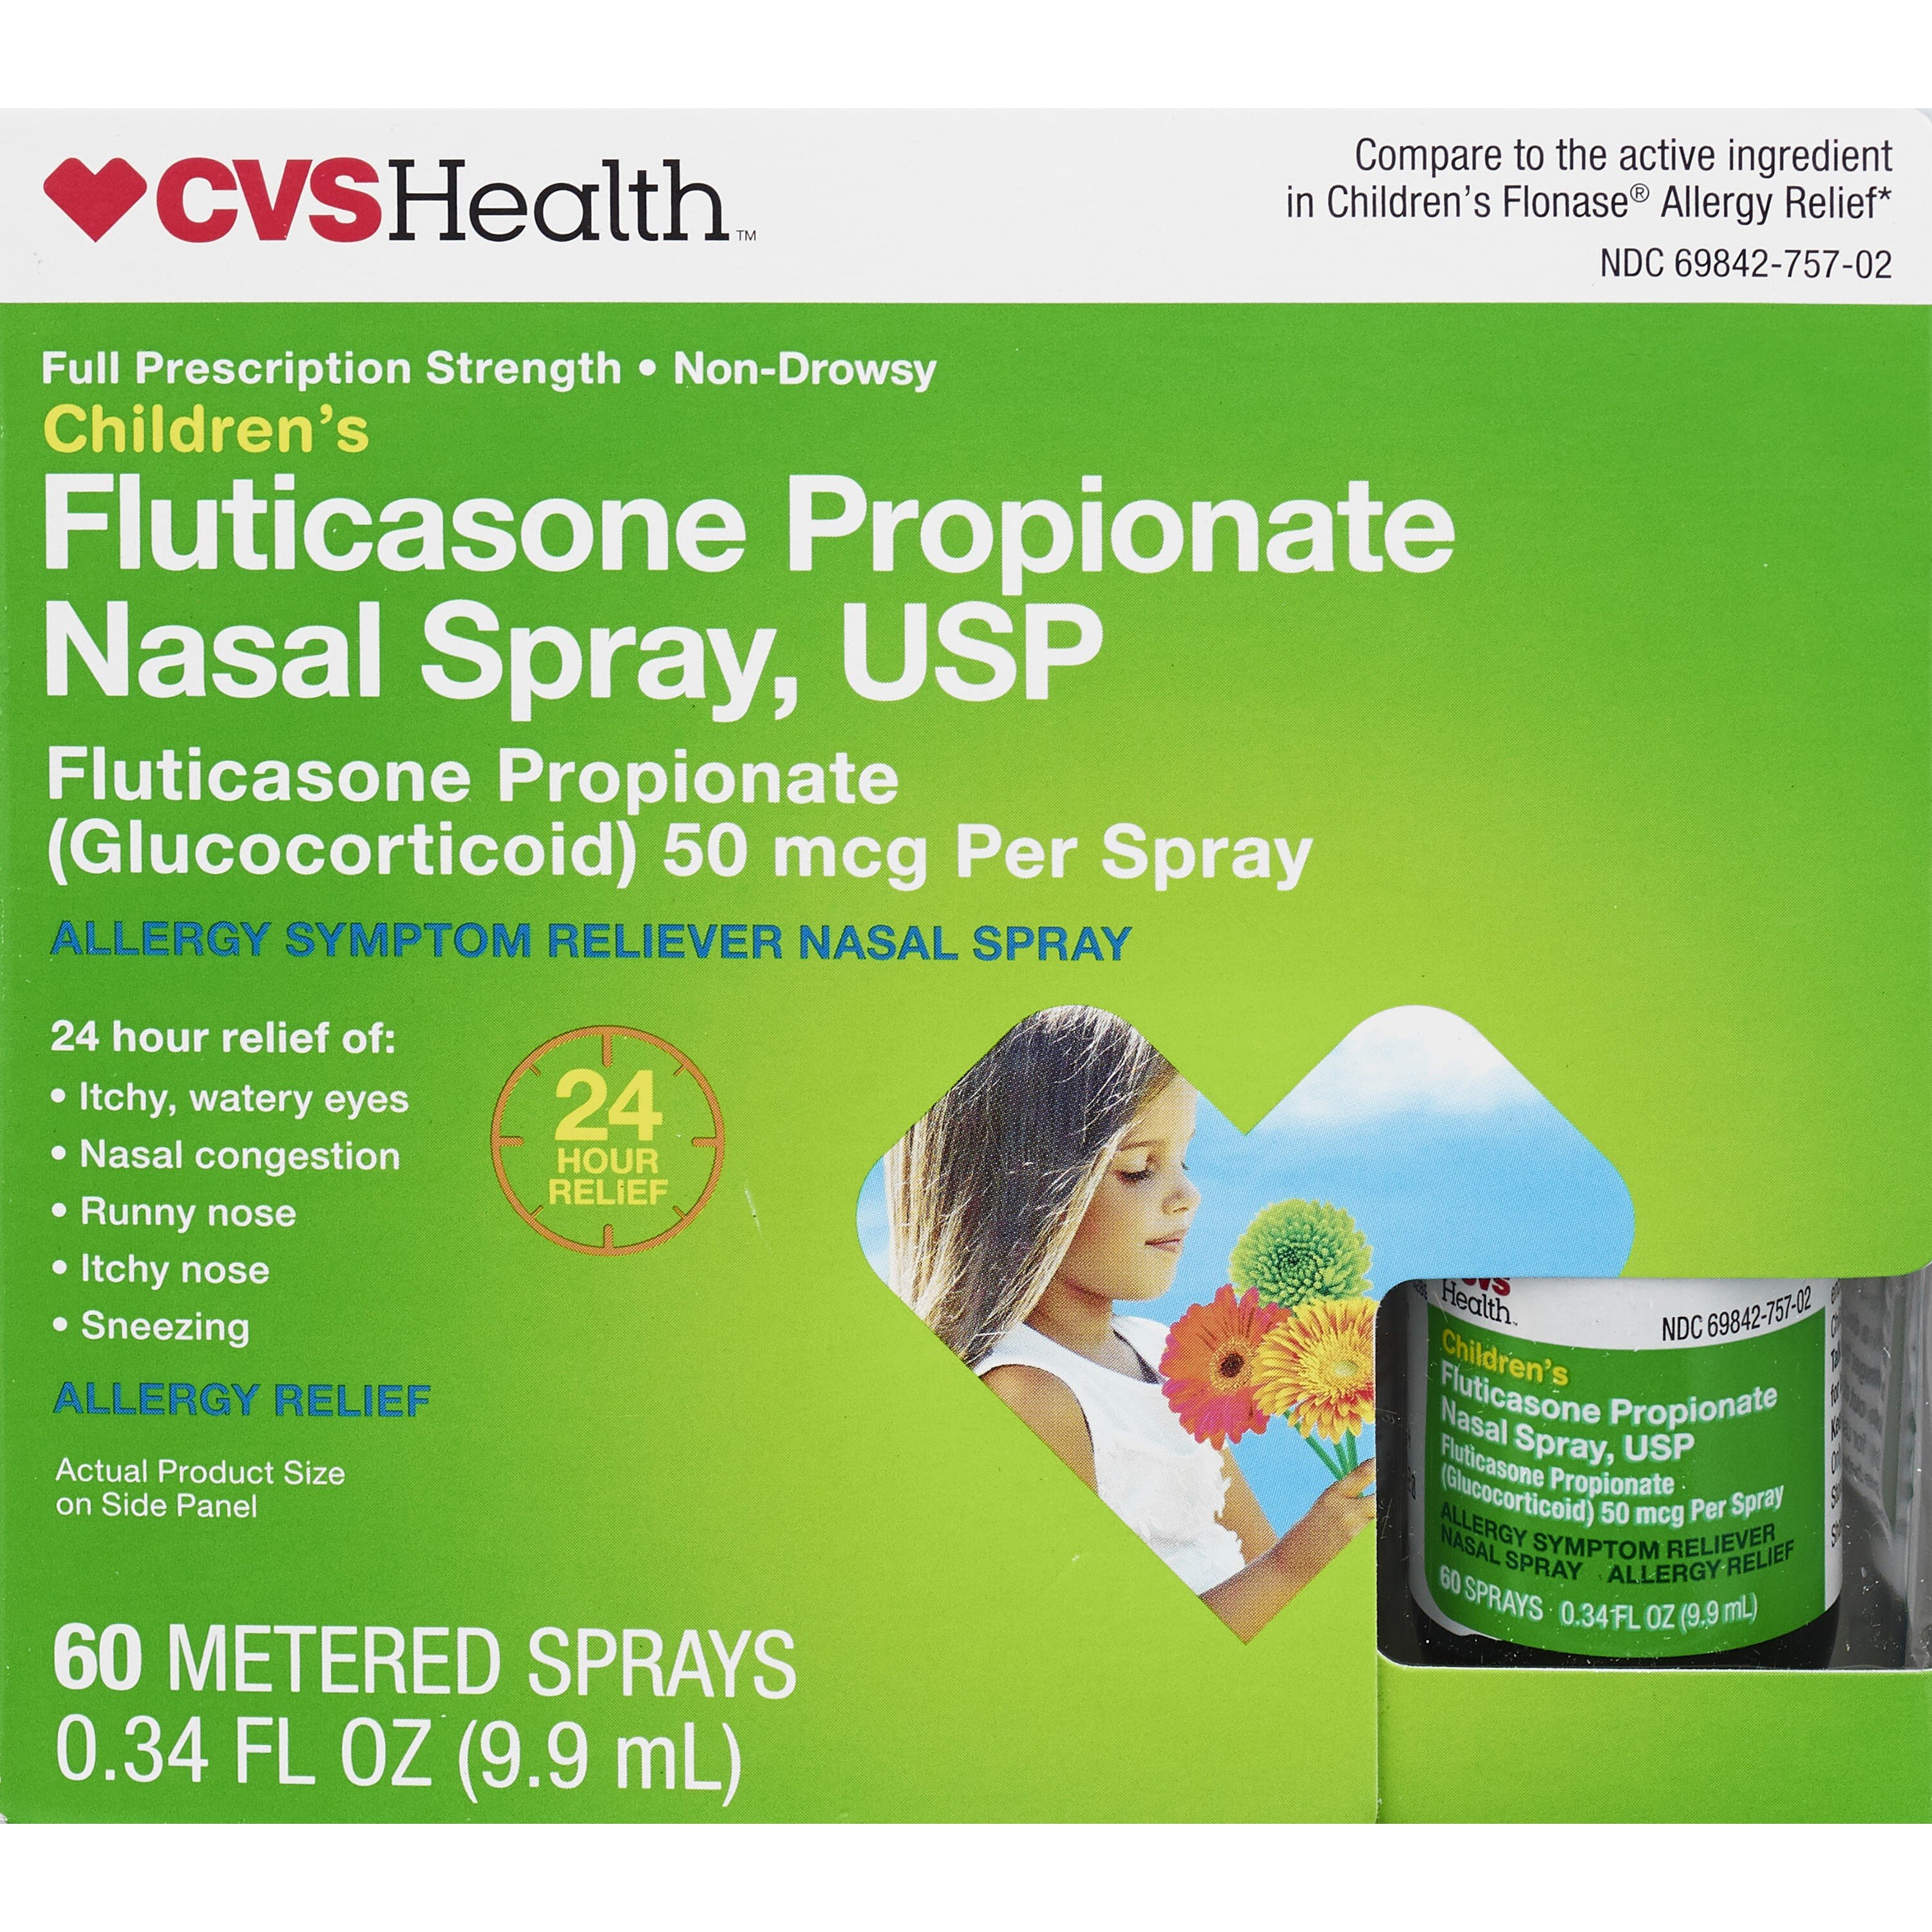 CVS Health Fluticasone Propionate Nasal Spray 50 mcg Pick Up Store TODAY at CVS